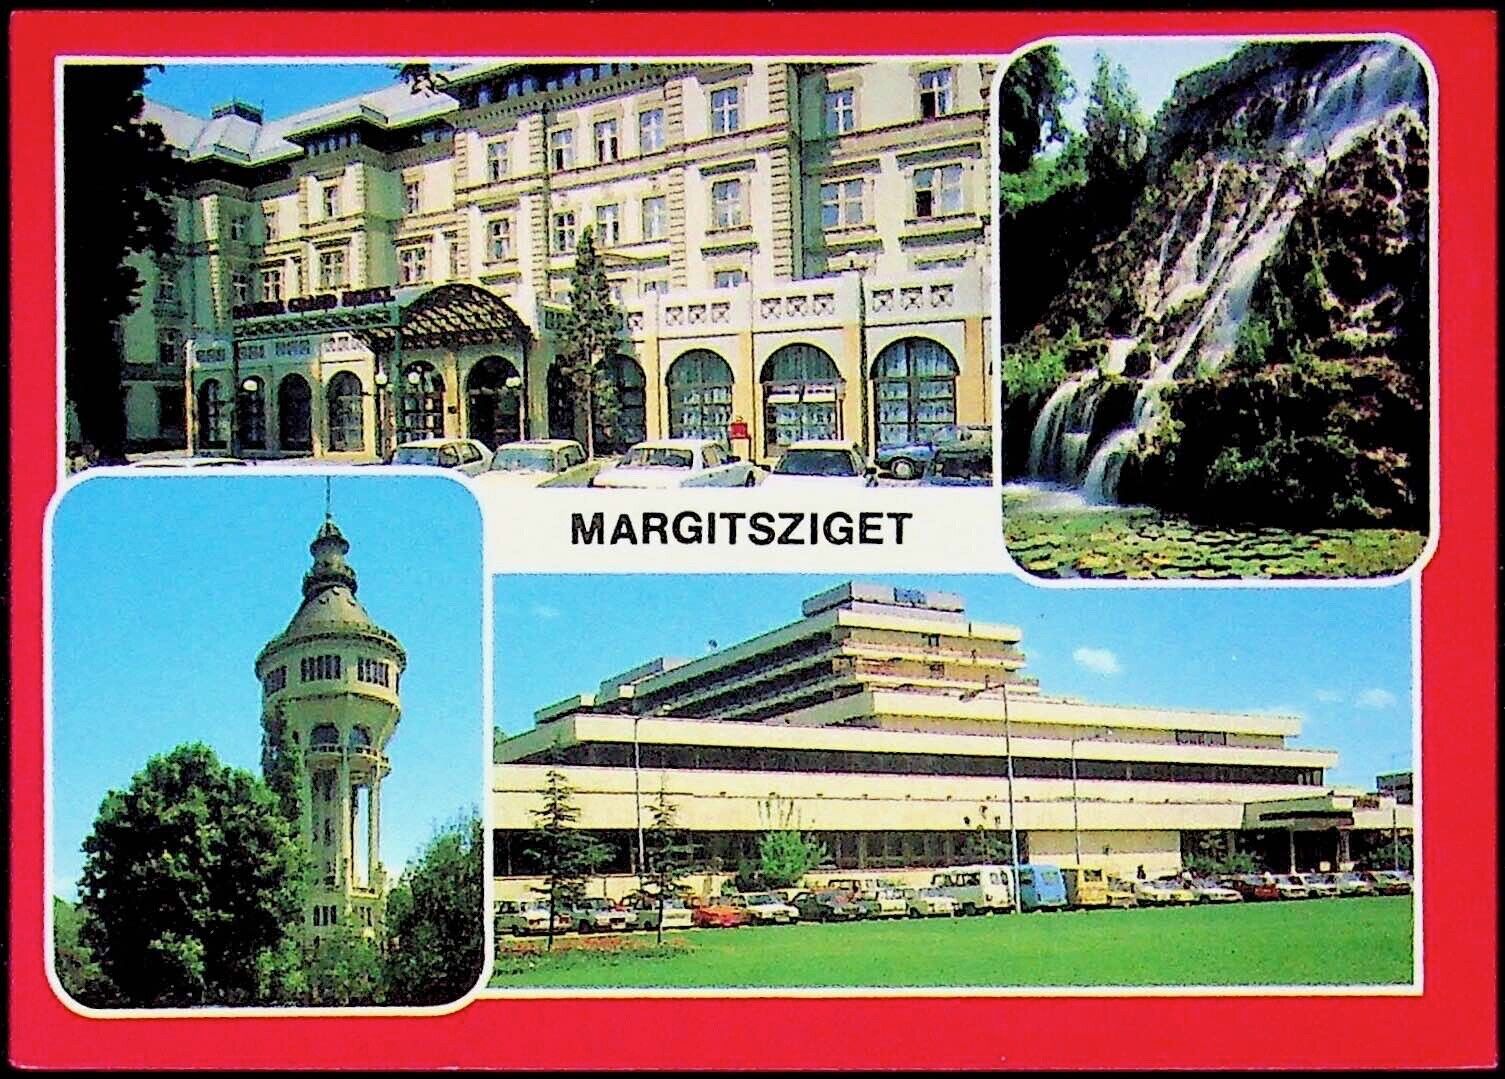 MARGITSZIGET - 13TH ARRONDISSEMENT OF BUDAPEST - VINTAGE POSTCARD